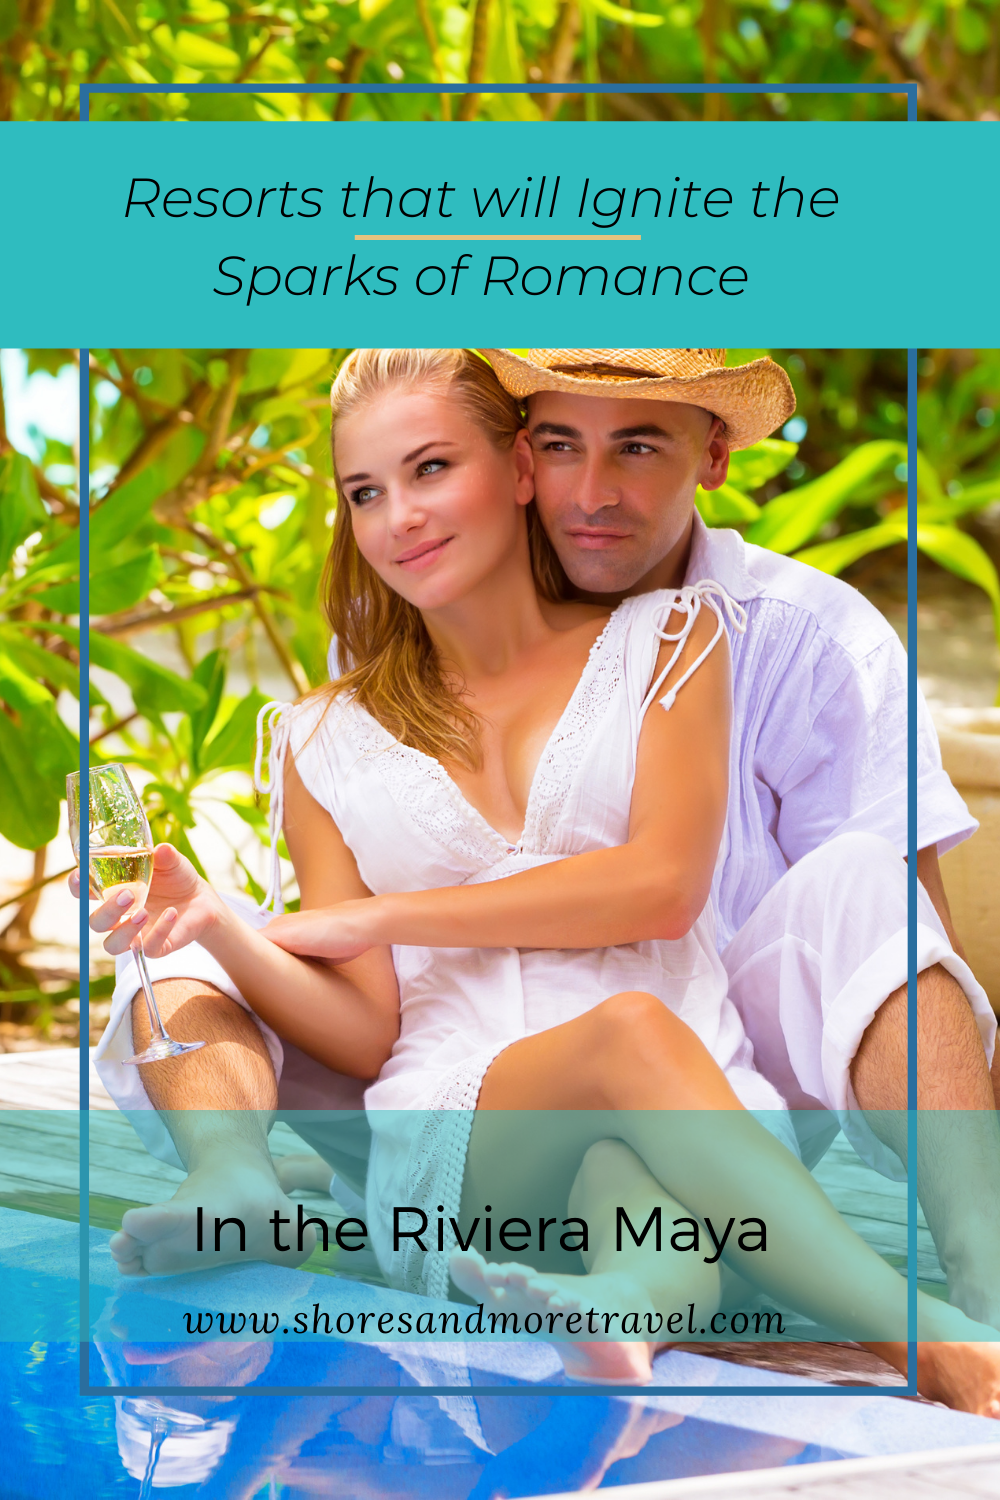 Romantic Resorts of the Riviera Maya